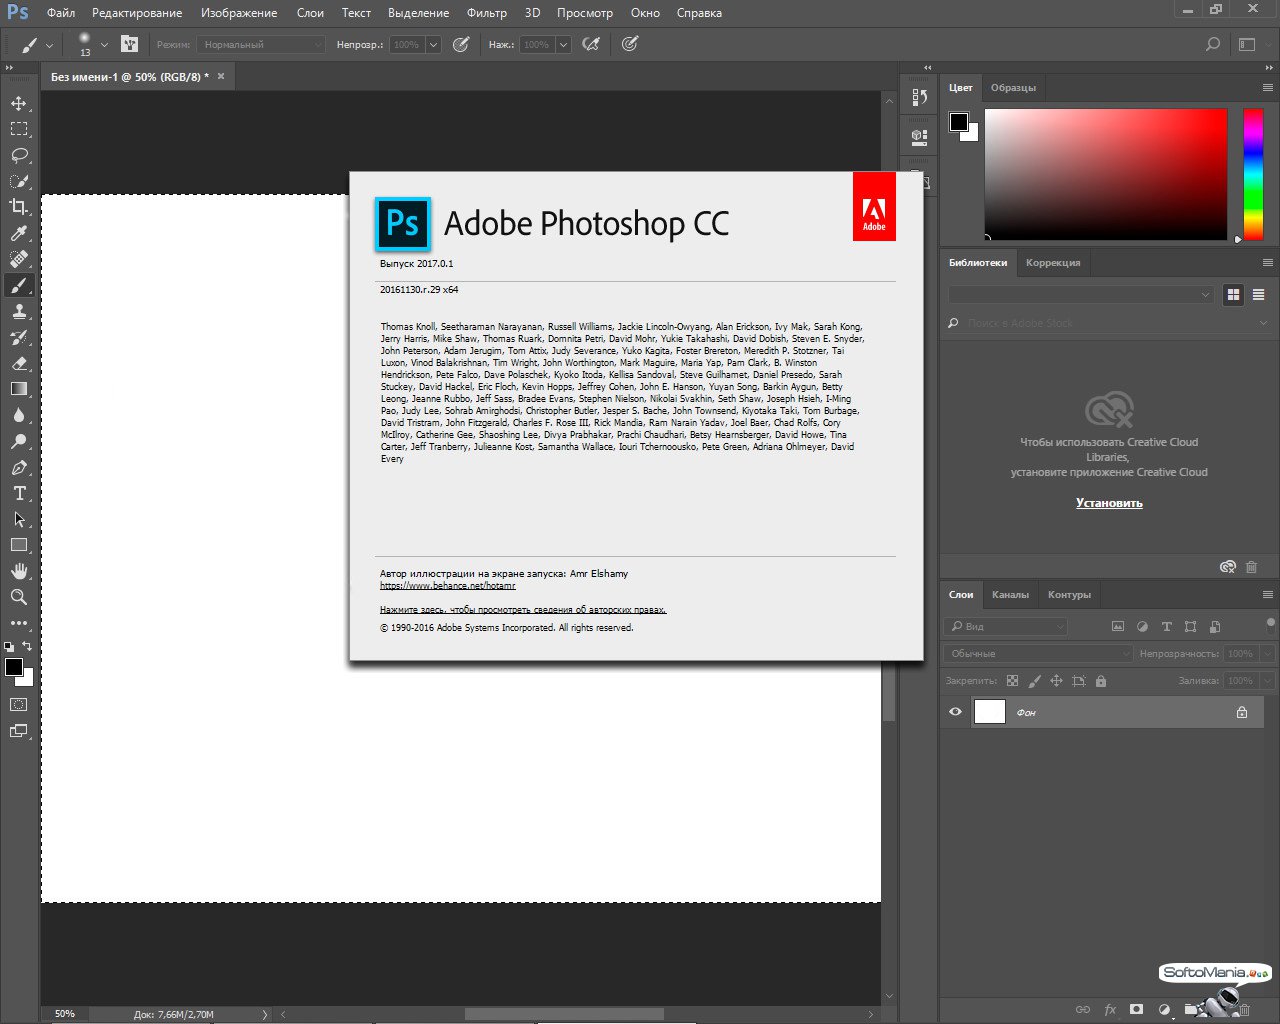 Adobe Photoshop Cc 2017 18.0.1 Cracked For Mac